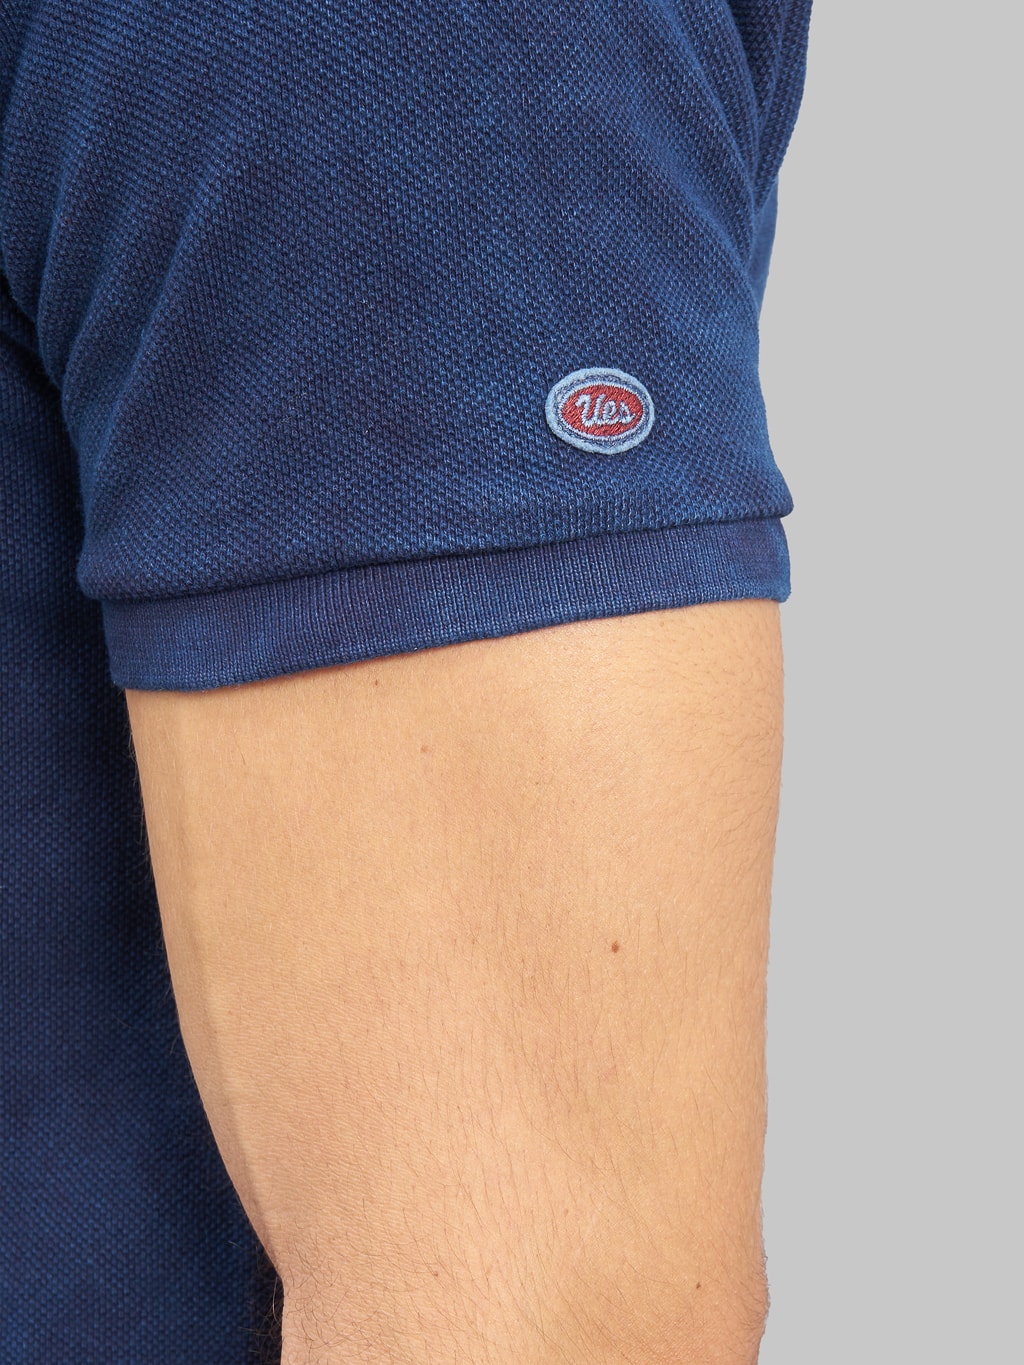 ues polo shirt indigo brand logo sleeve